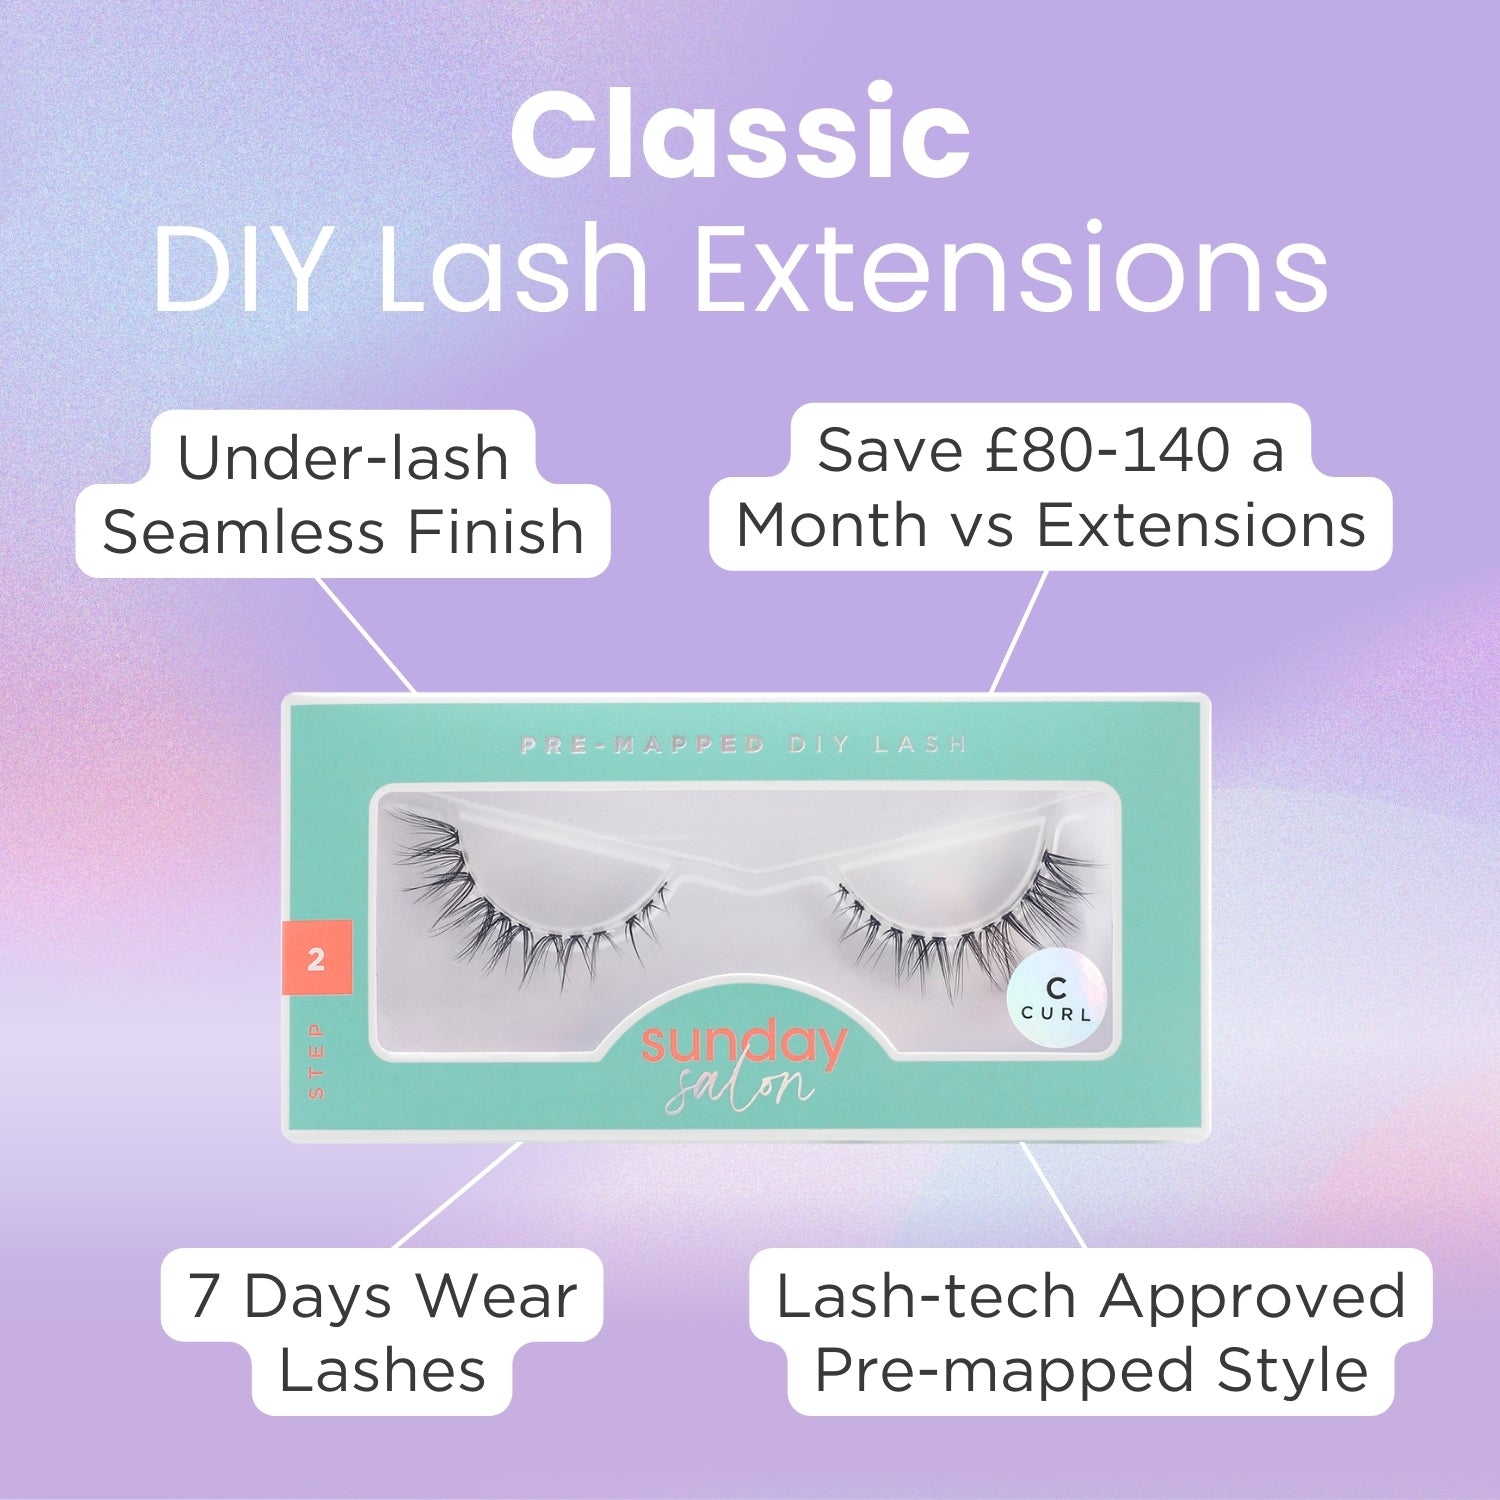 Classic DIY Lash Extension Kit - Lola's Lashes